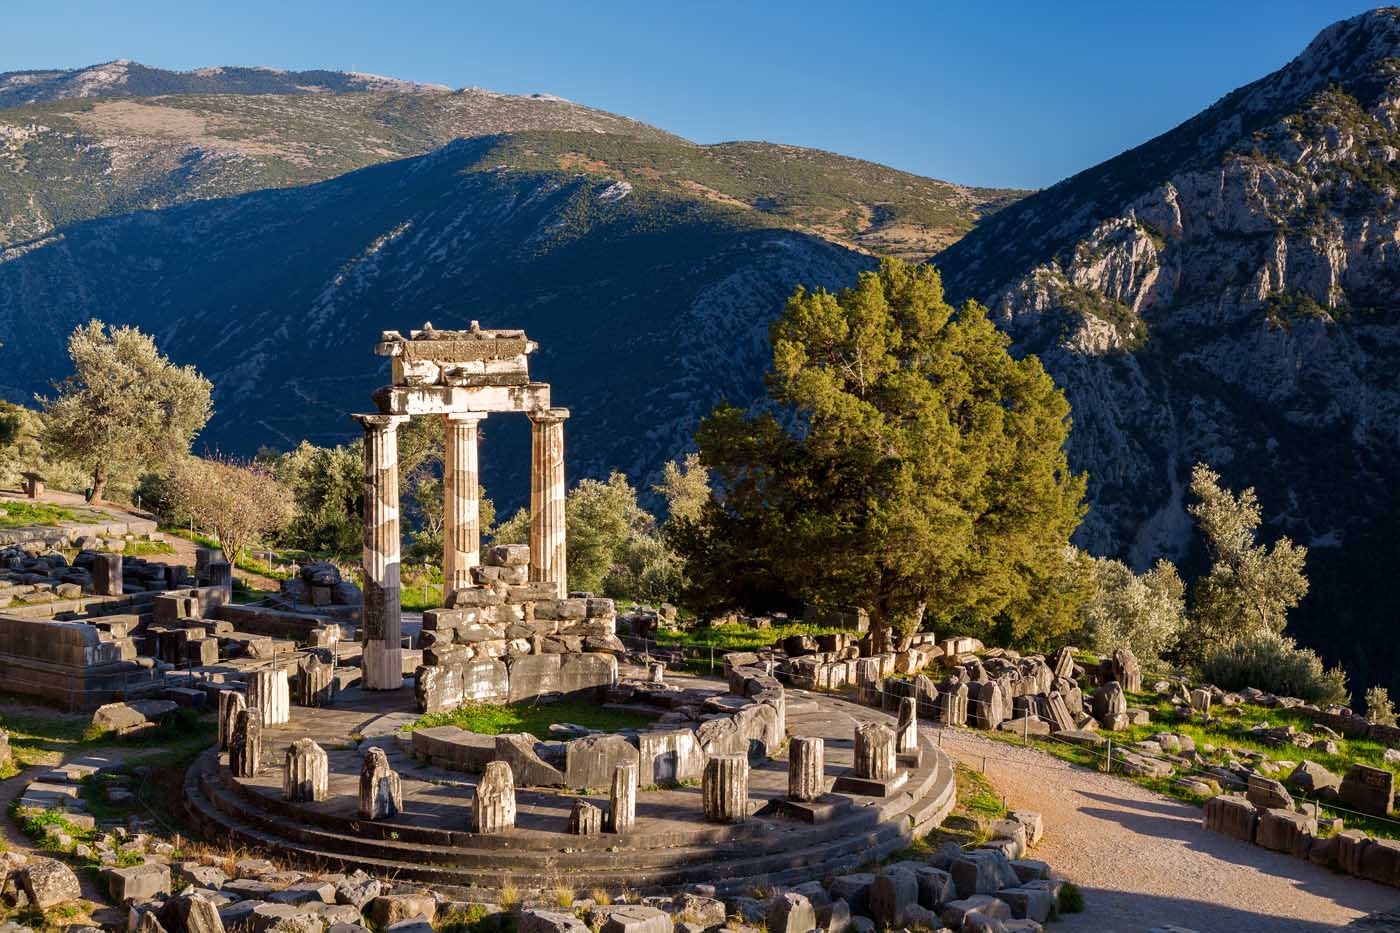 The ruins of Delphi